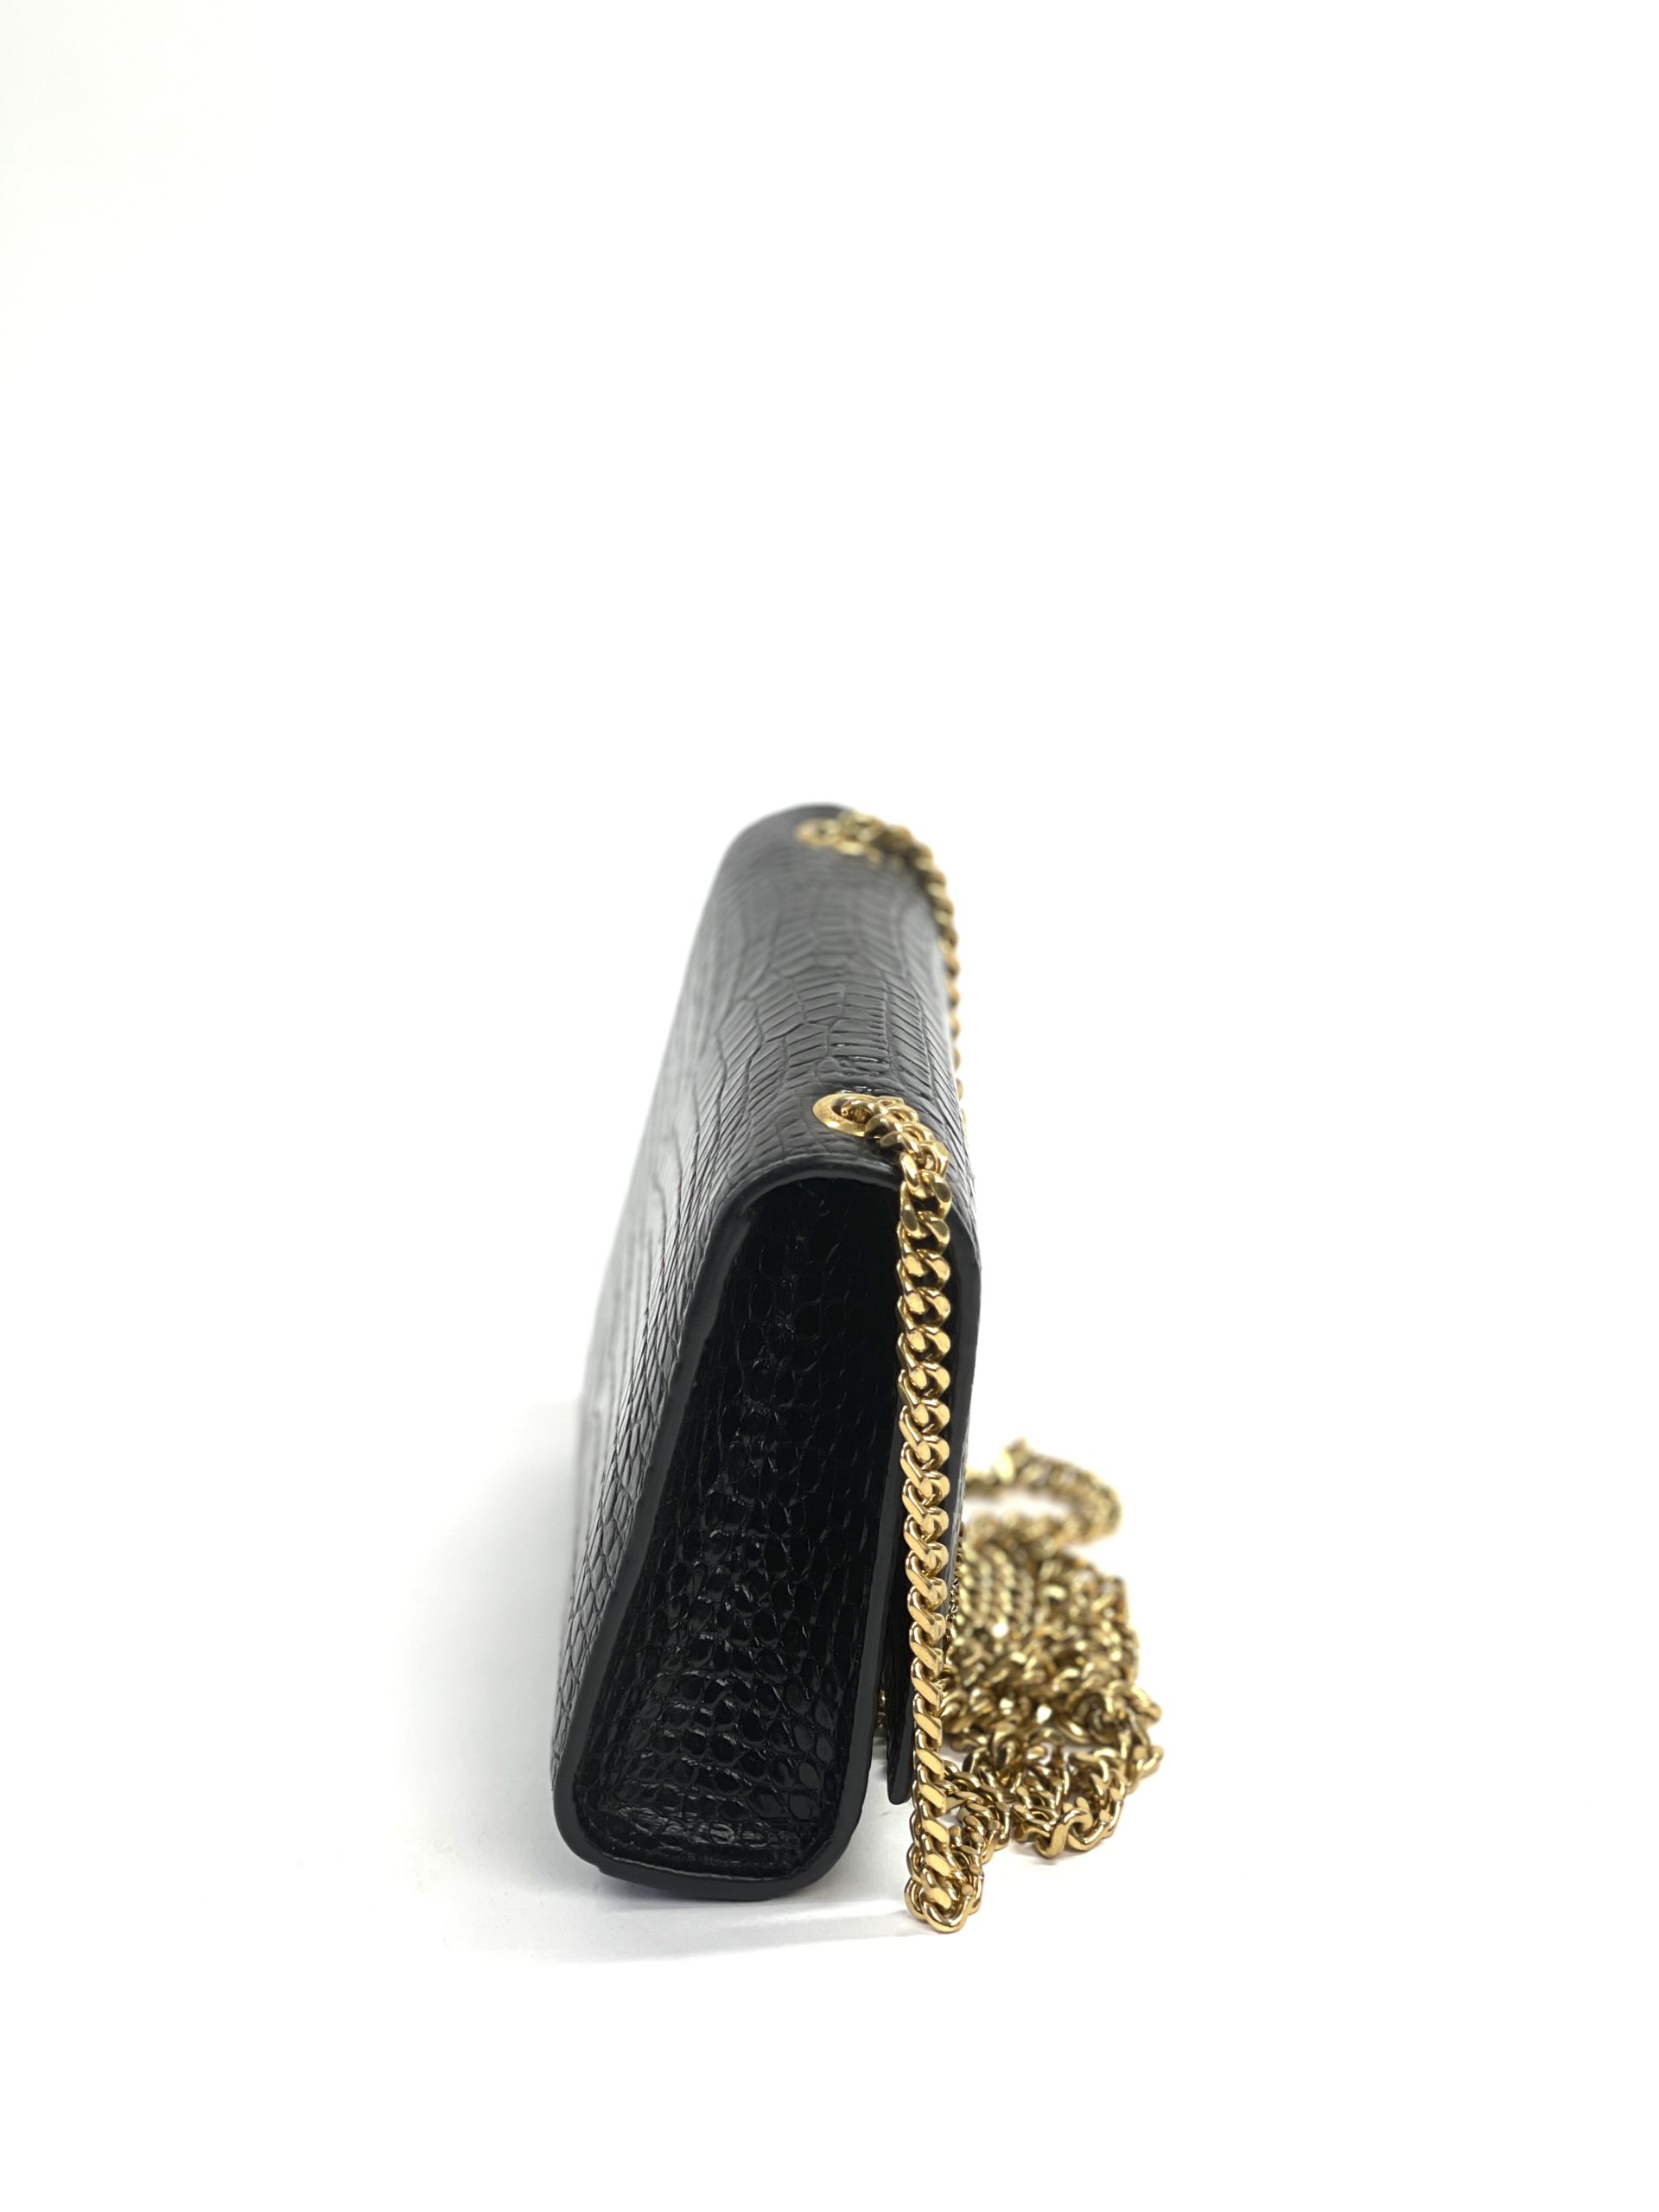 Saint Laurent Women's Small Kate Crocodile-Embossed Leather Shoulder Bag with Tassel - Noir